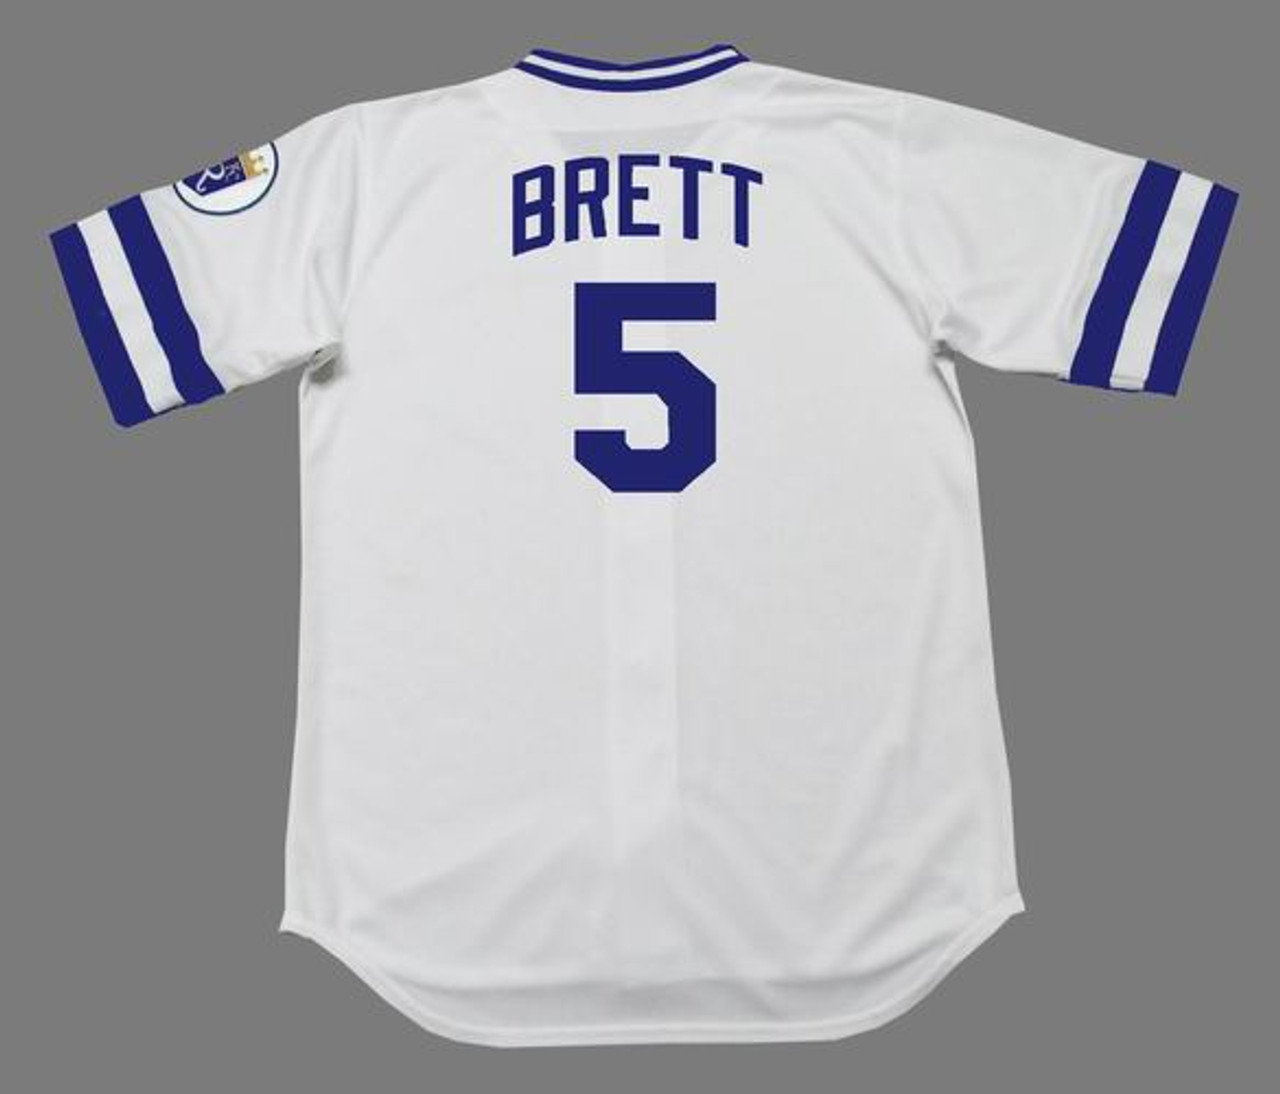 George Brett Shirt 